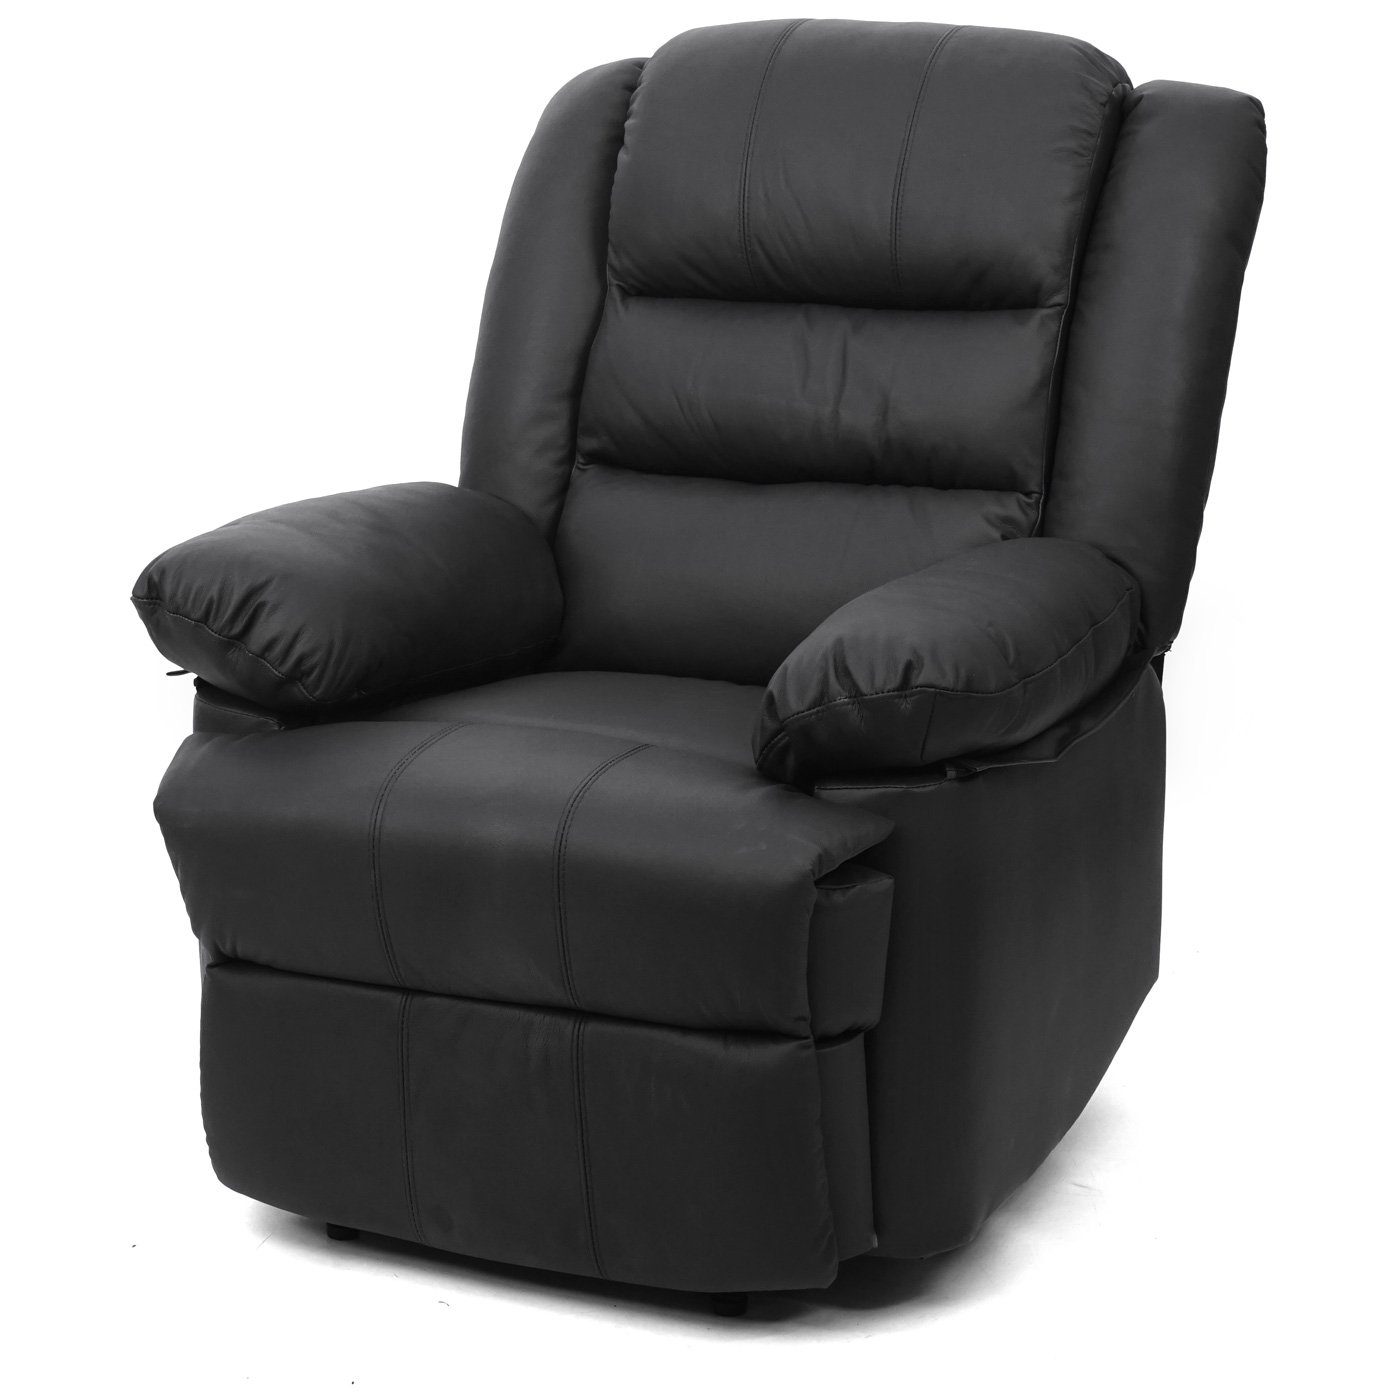 MCW Fußstütze 165 Liegefläche: MCW-G15, TV-Sessel Rückenfläche, schwarz cm, verstellbar, Liegefunktion Verstellbare